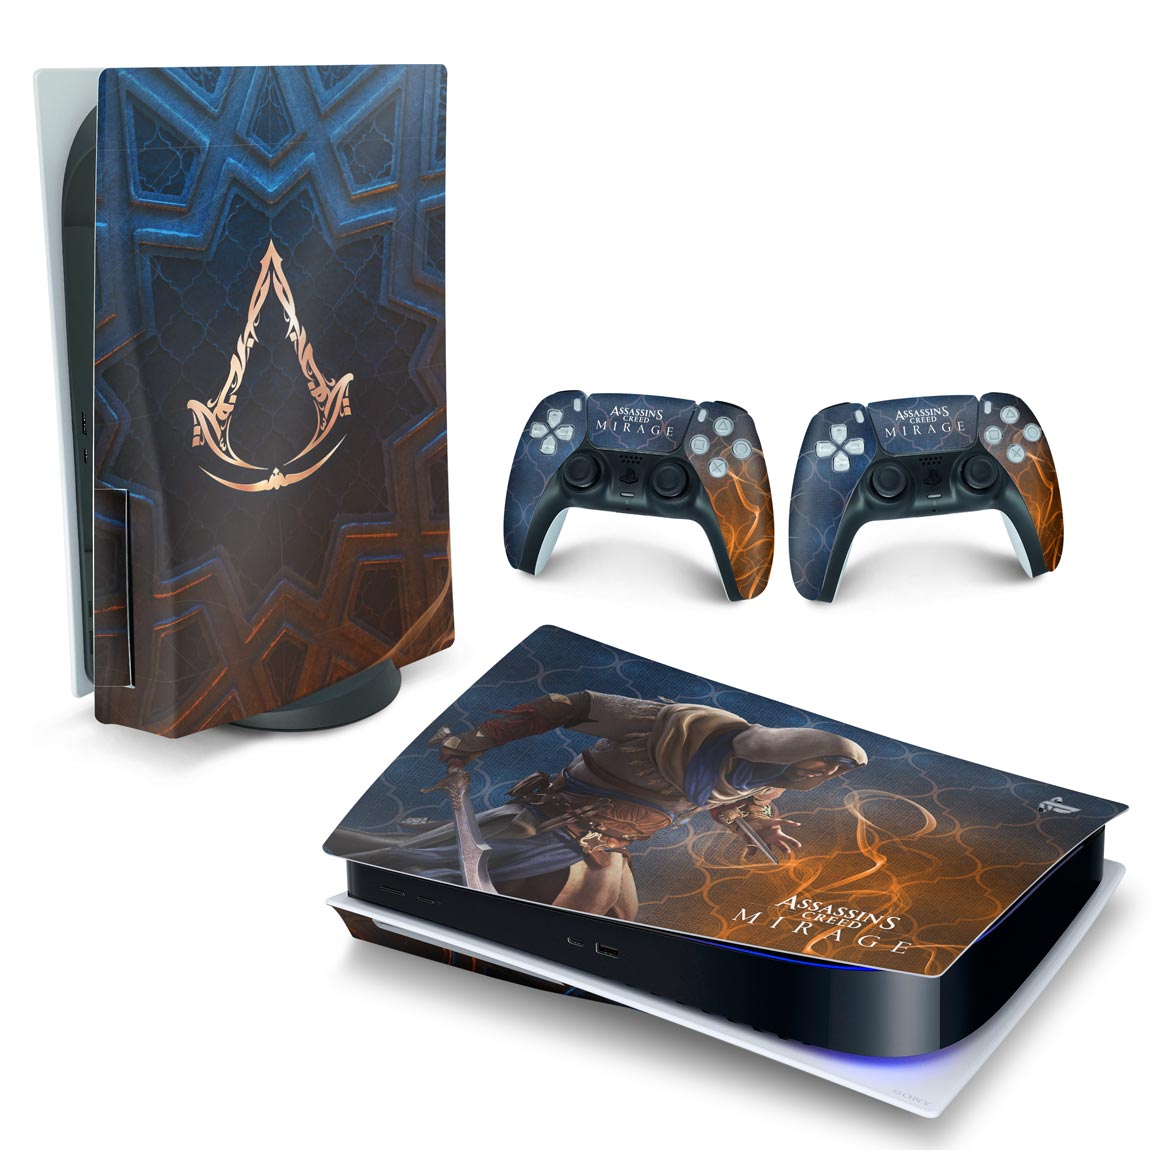 Assassin's Creed Mirage - Jogos PS4 e PS5